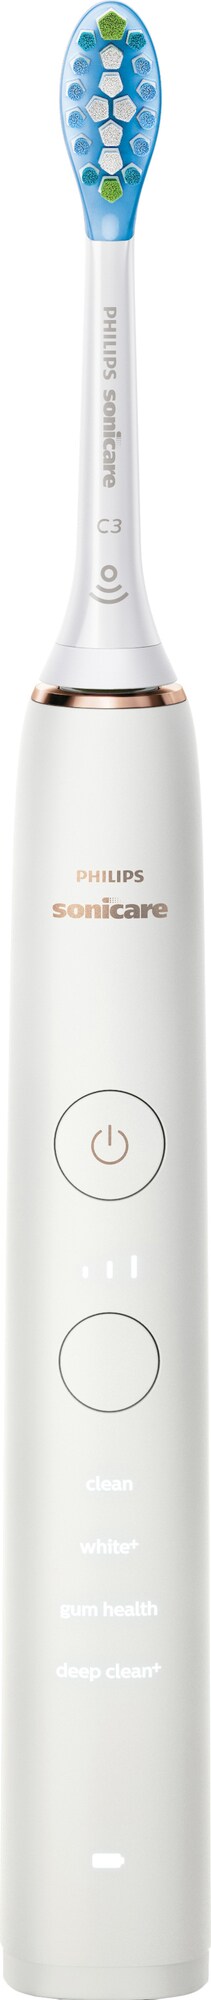 Philips Sonicare Diamond Clean elektrisk tandbørste HX991194V2 (rose gold)  | Øvrige hvidevarer